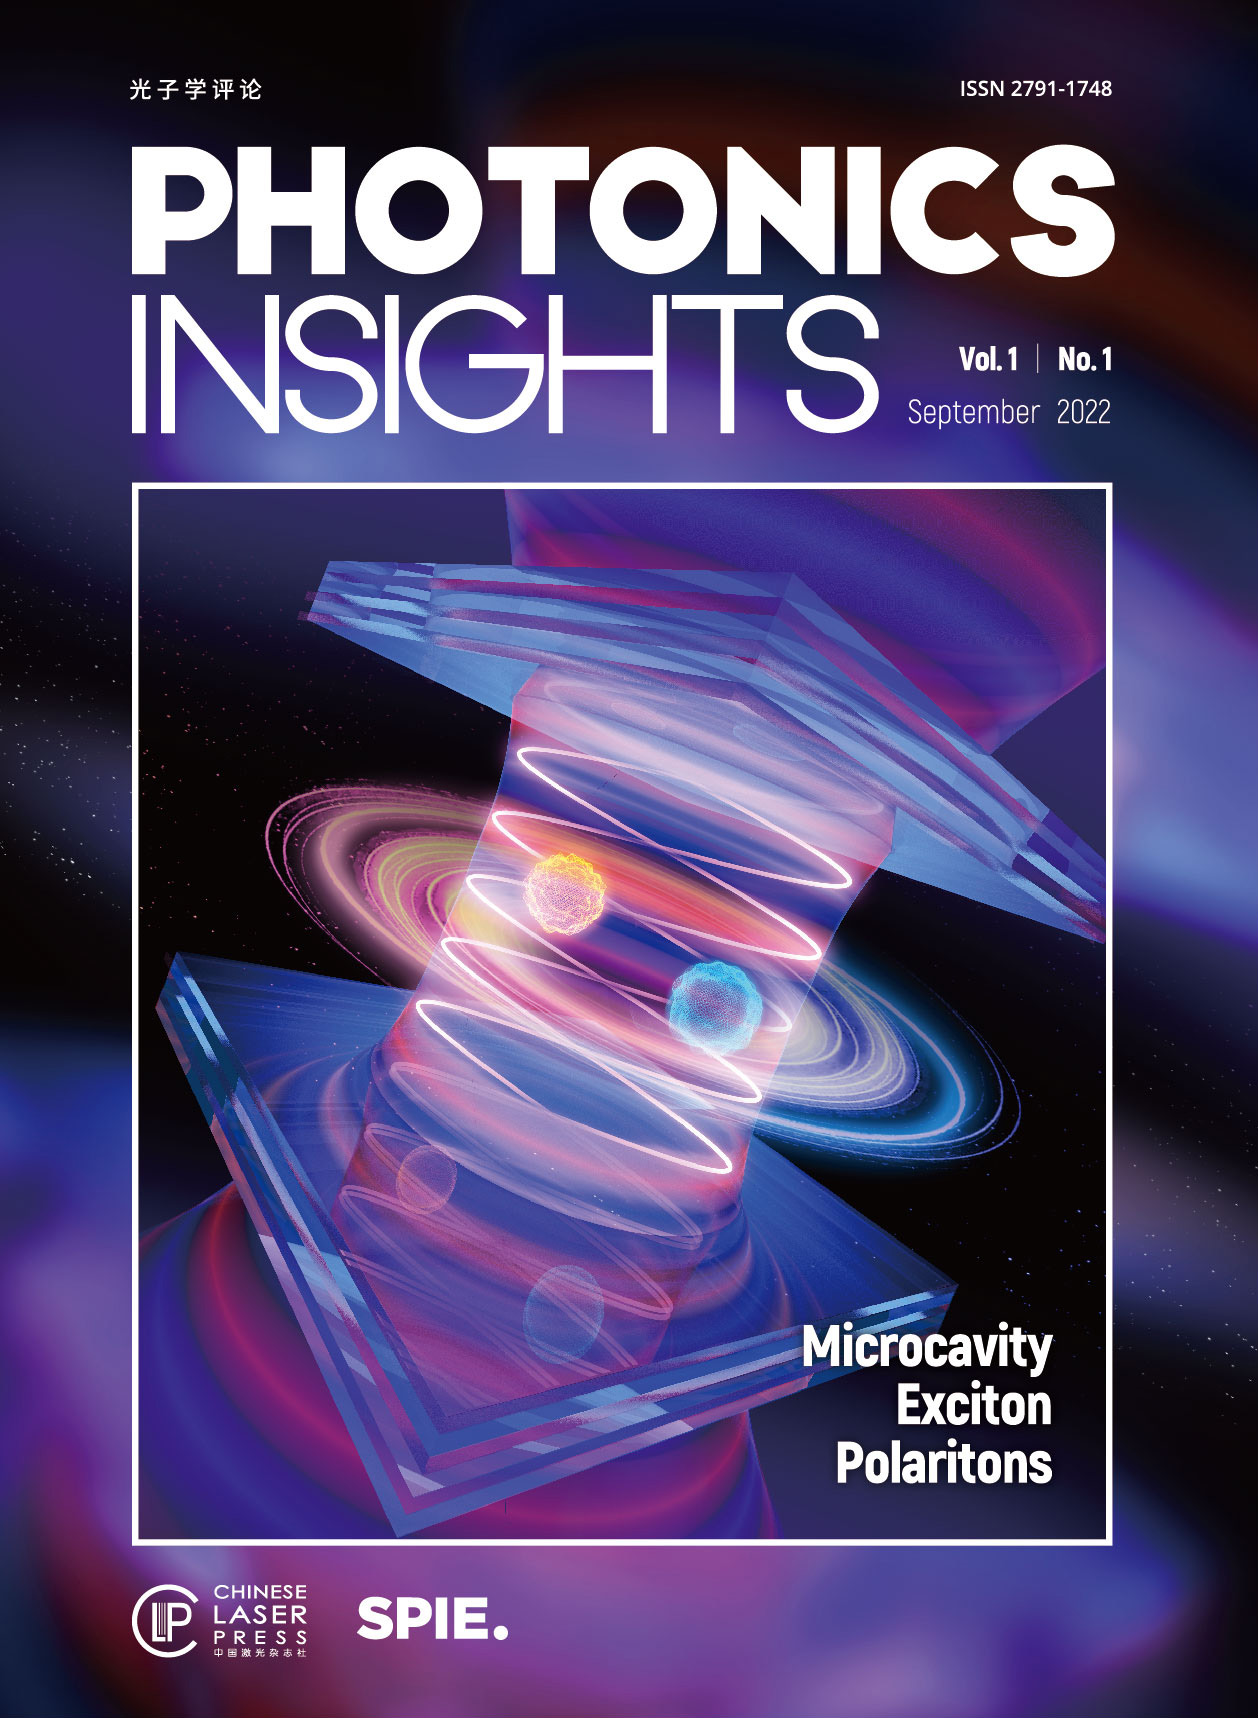 Photonics Insights